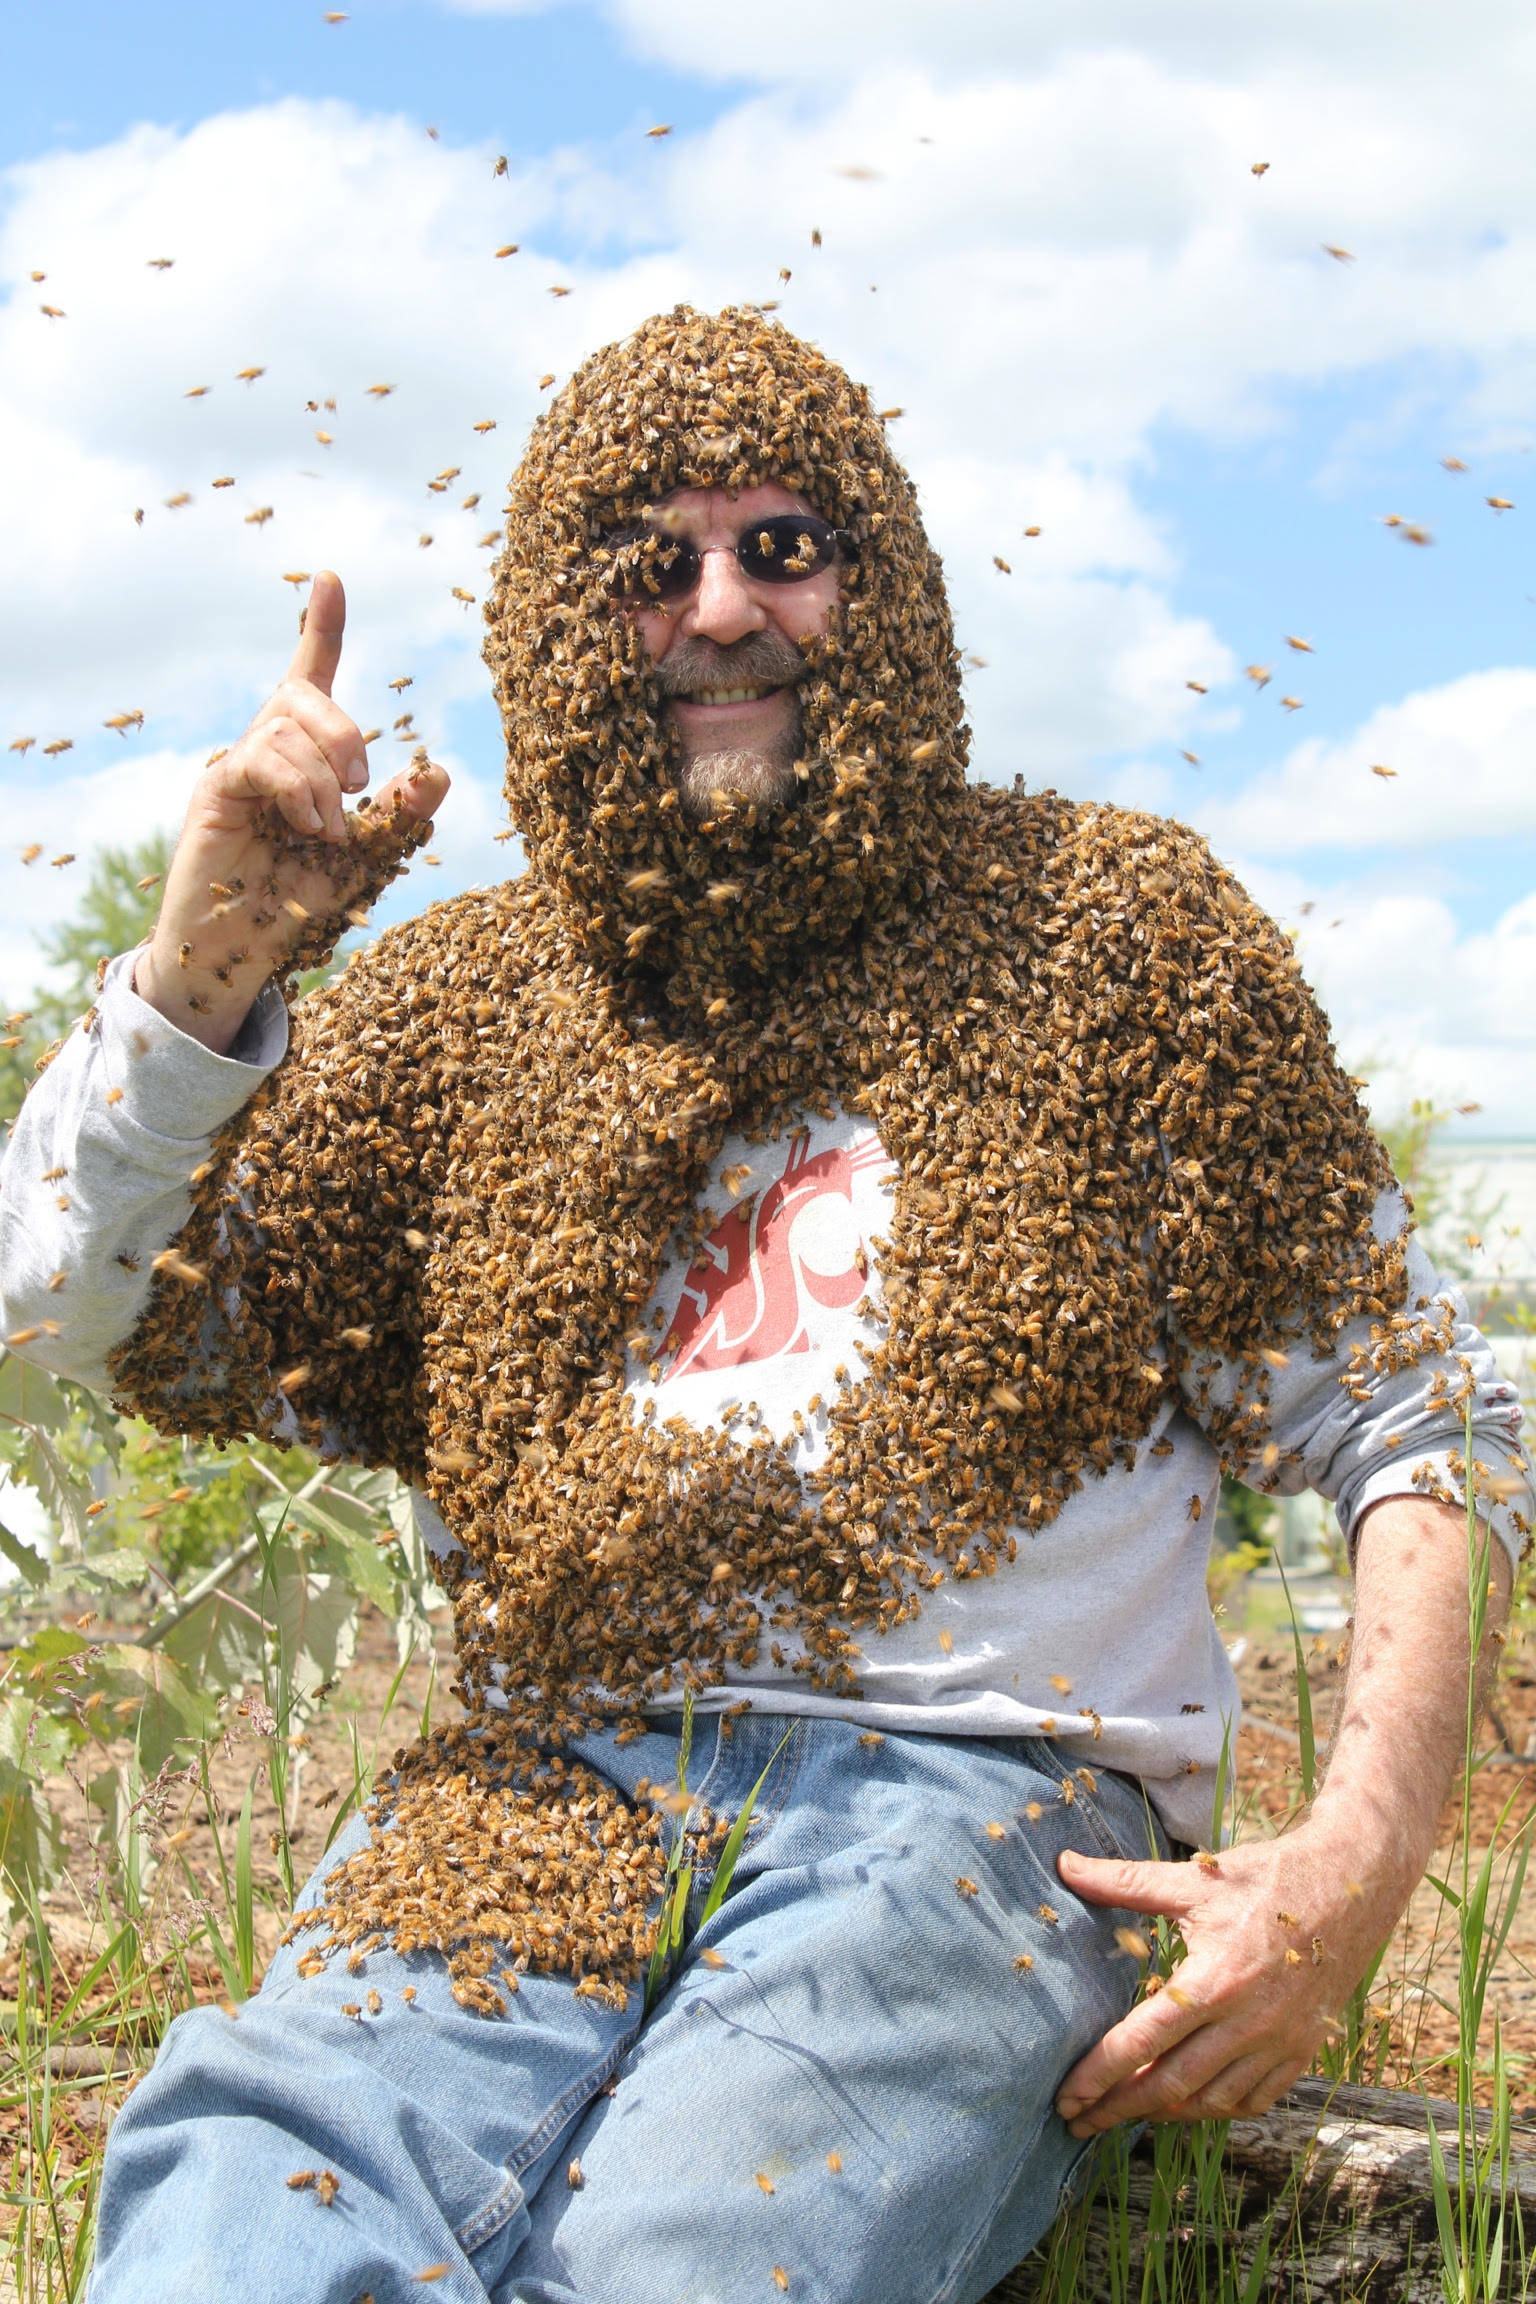 Tim Lawrence wearing the uniform of the WSU Honey Bee Health program. Photo provided